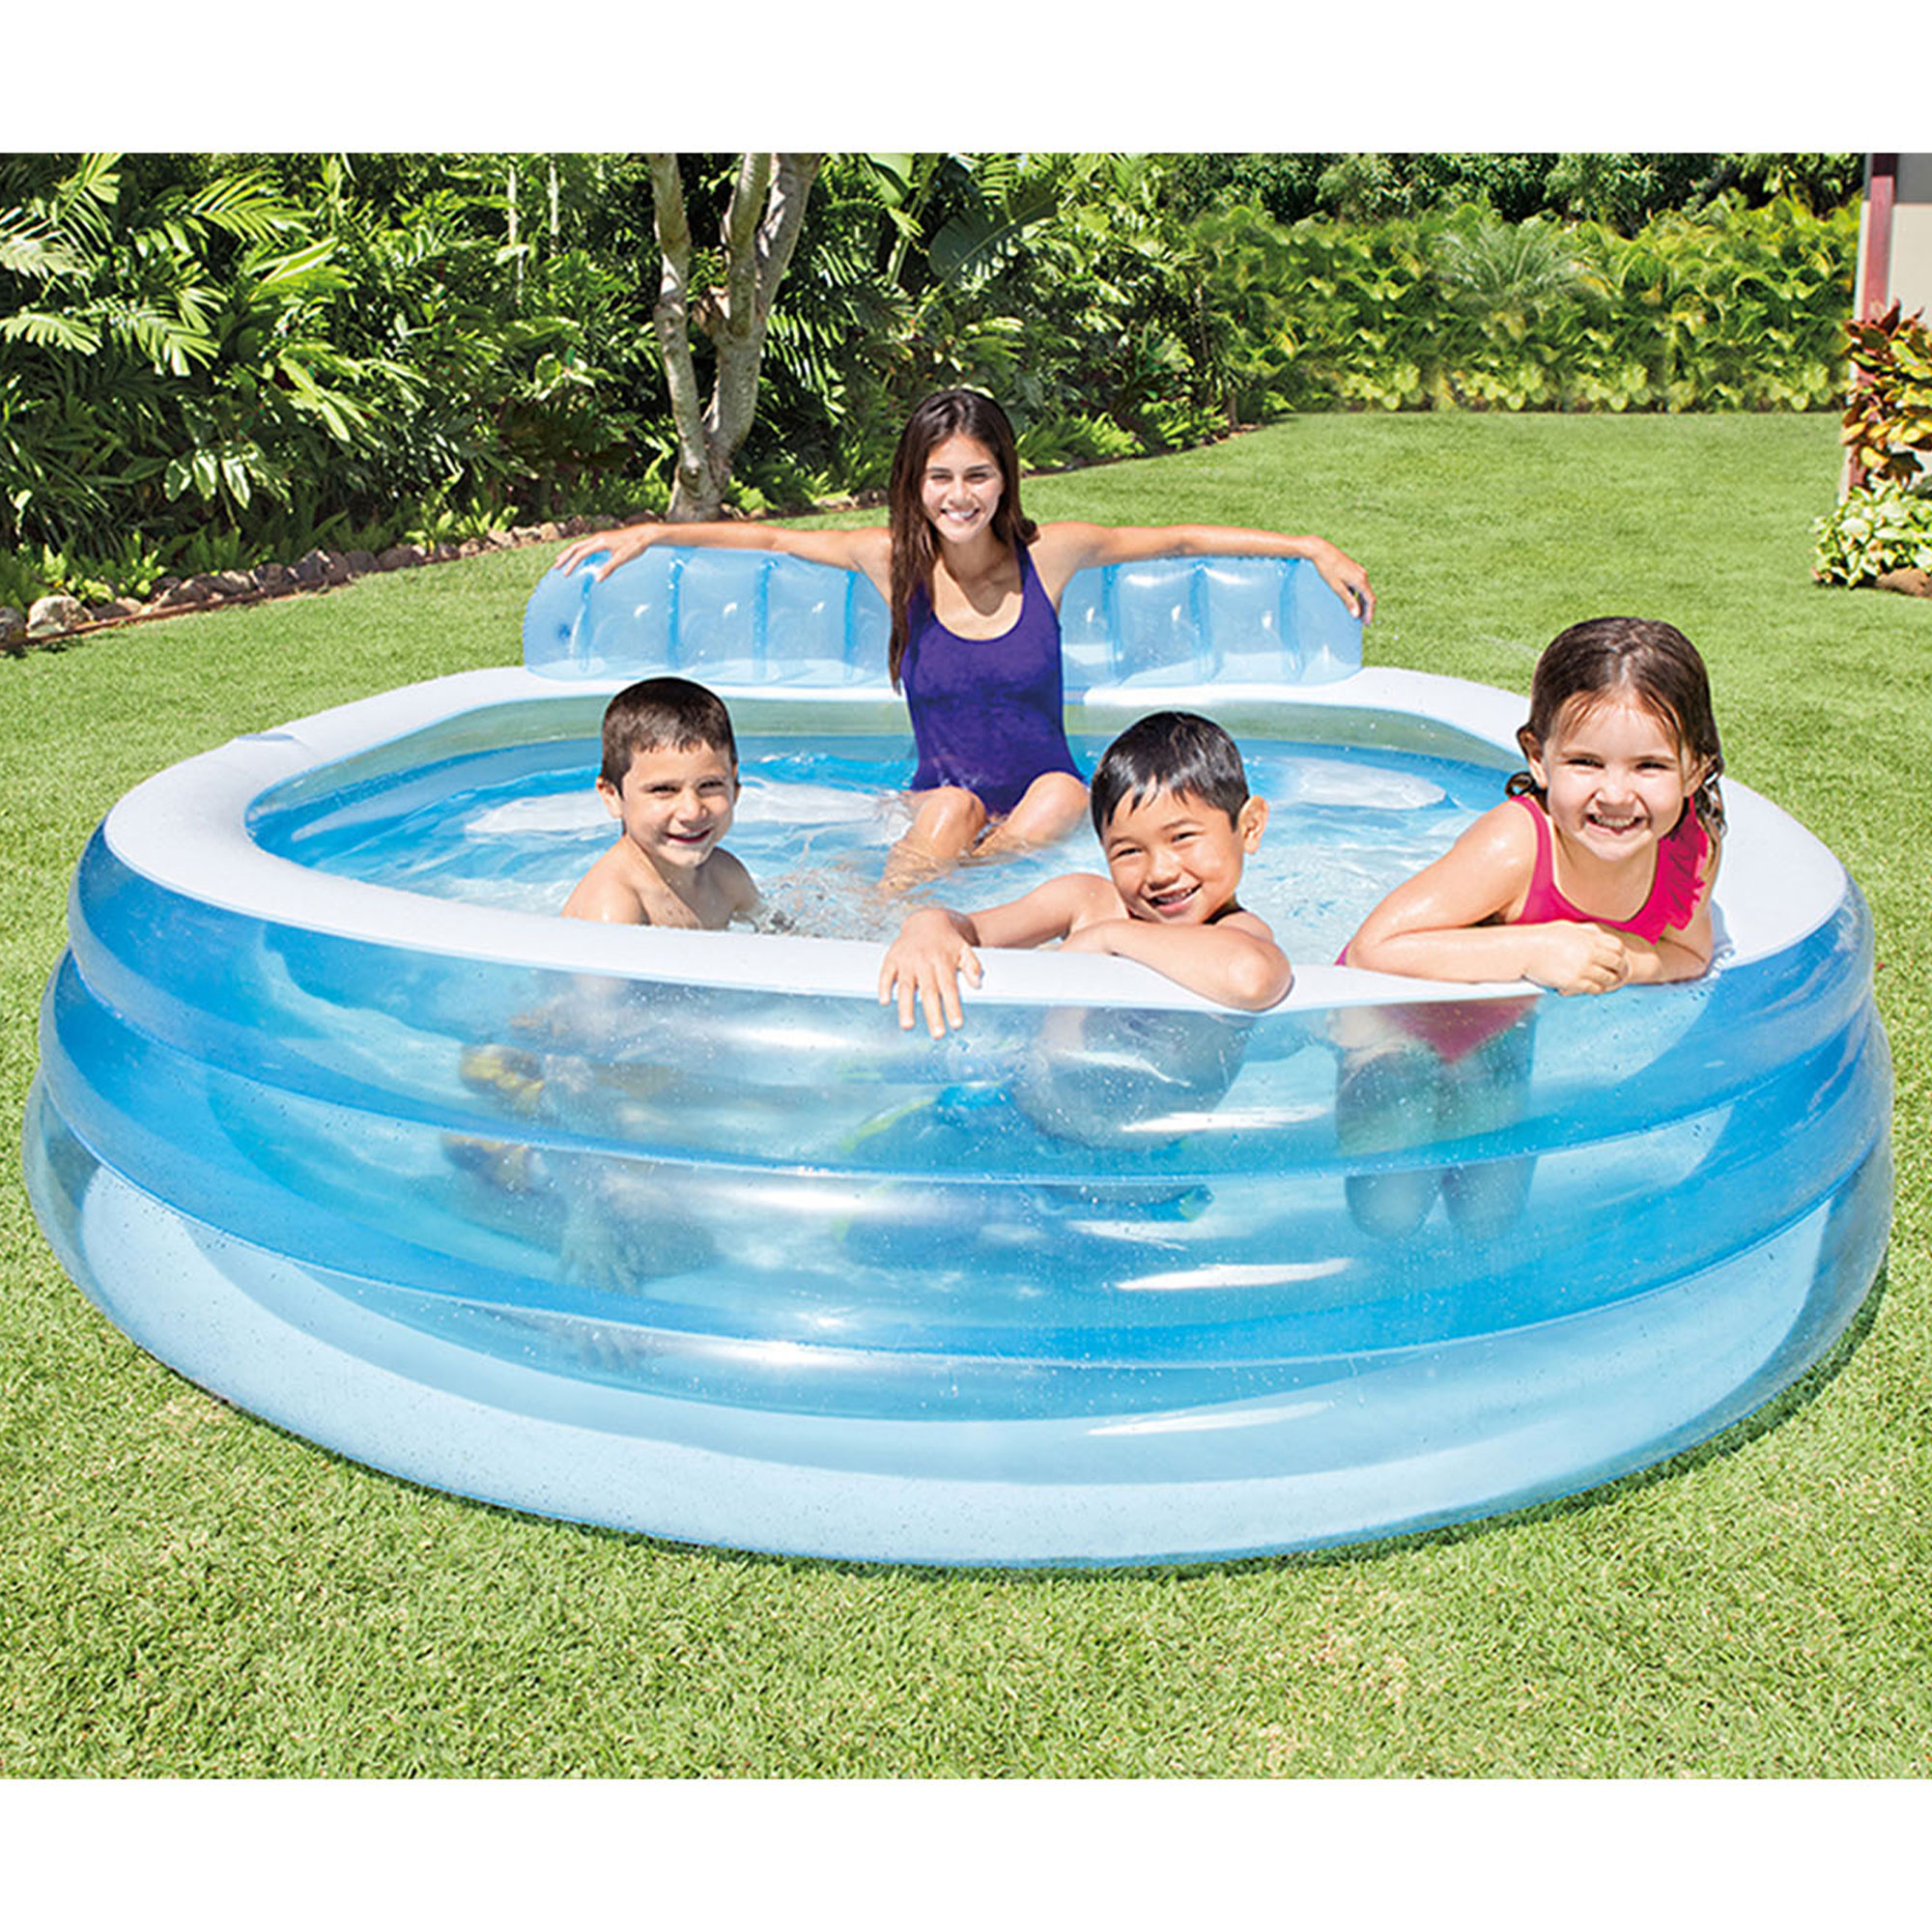 Intex Swim Center Family Inflatable Lounge Pool, 88" x 85" x 30" - image 4 of 8